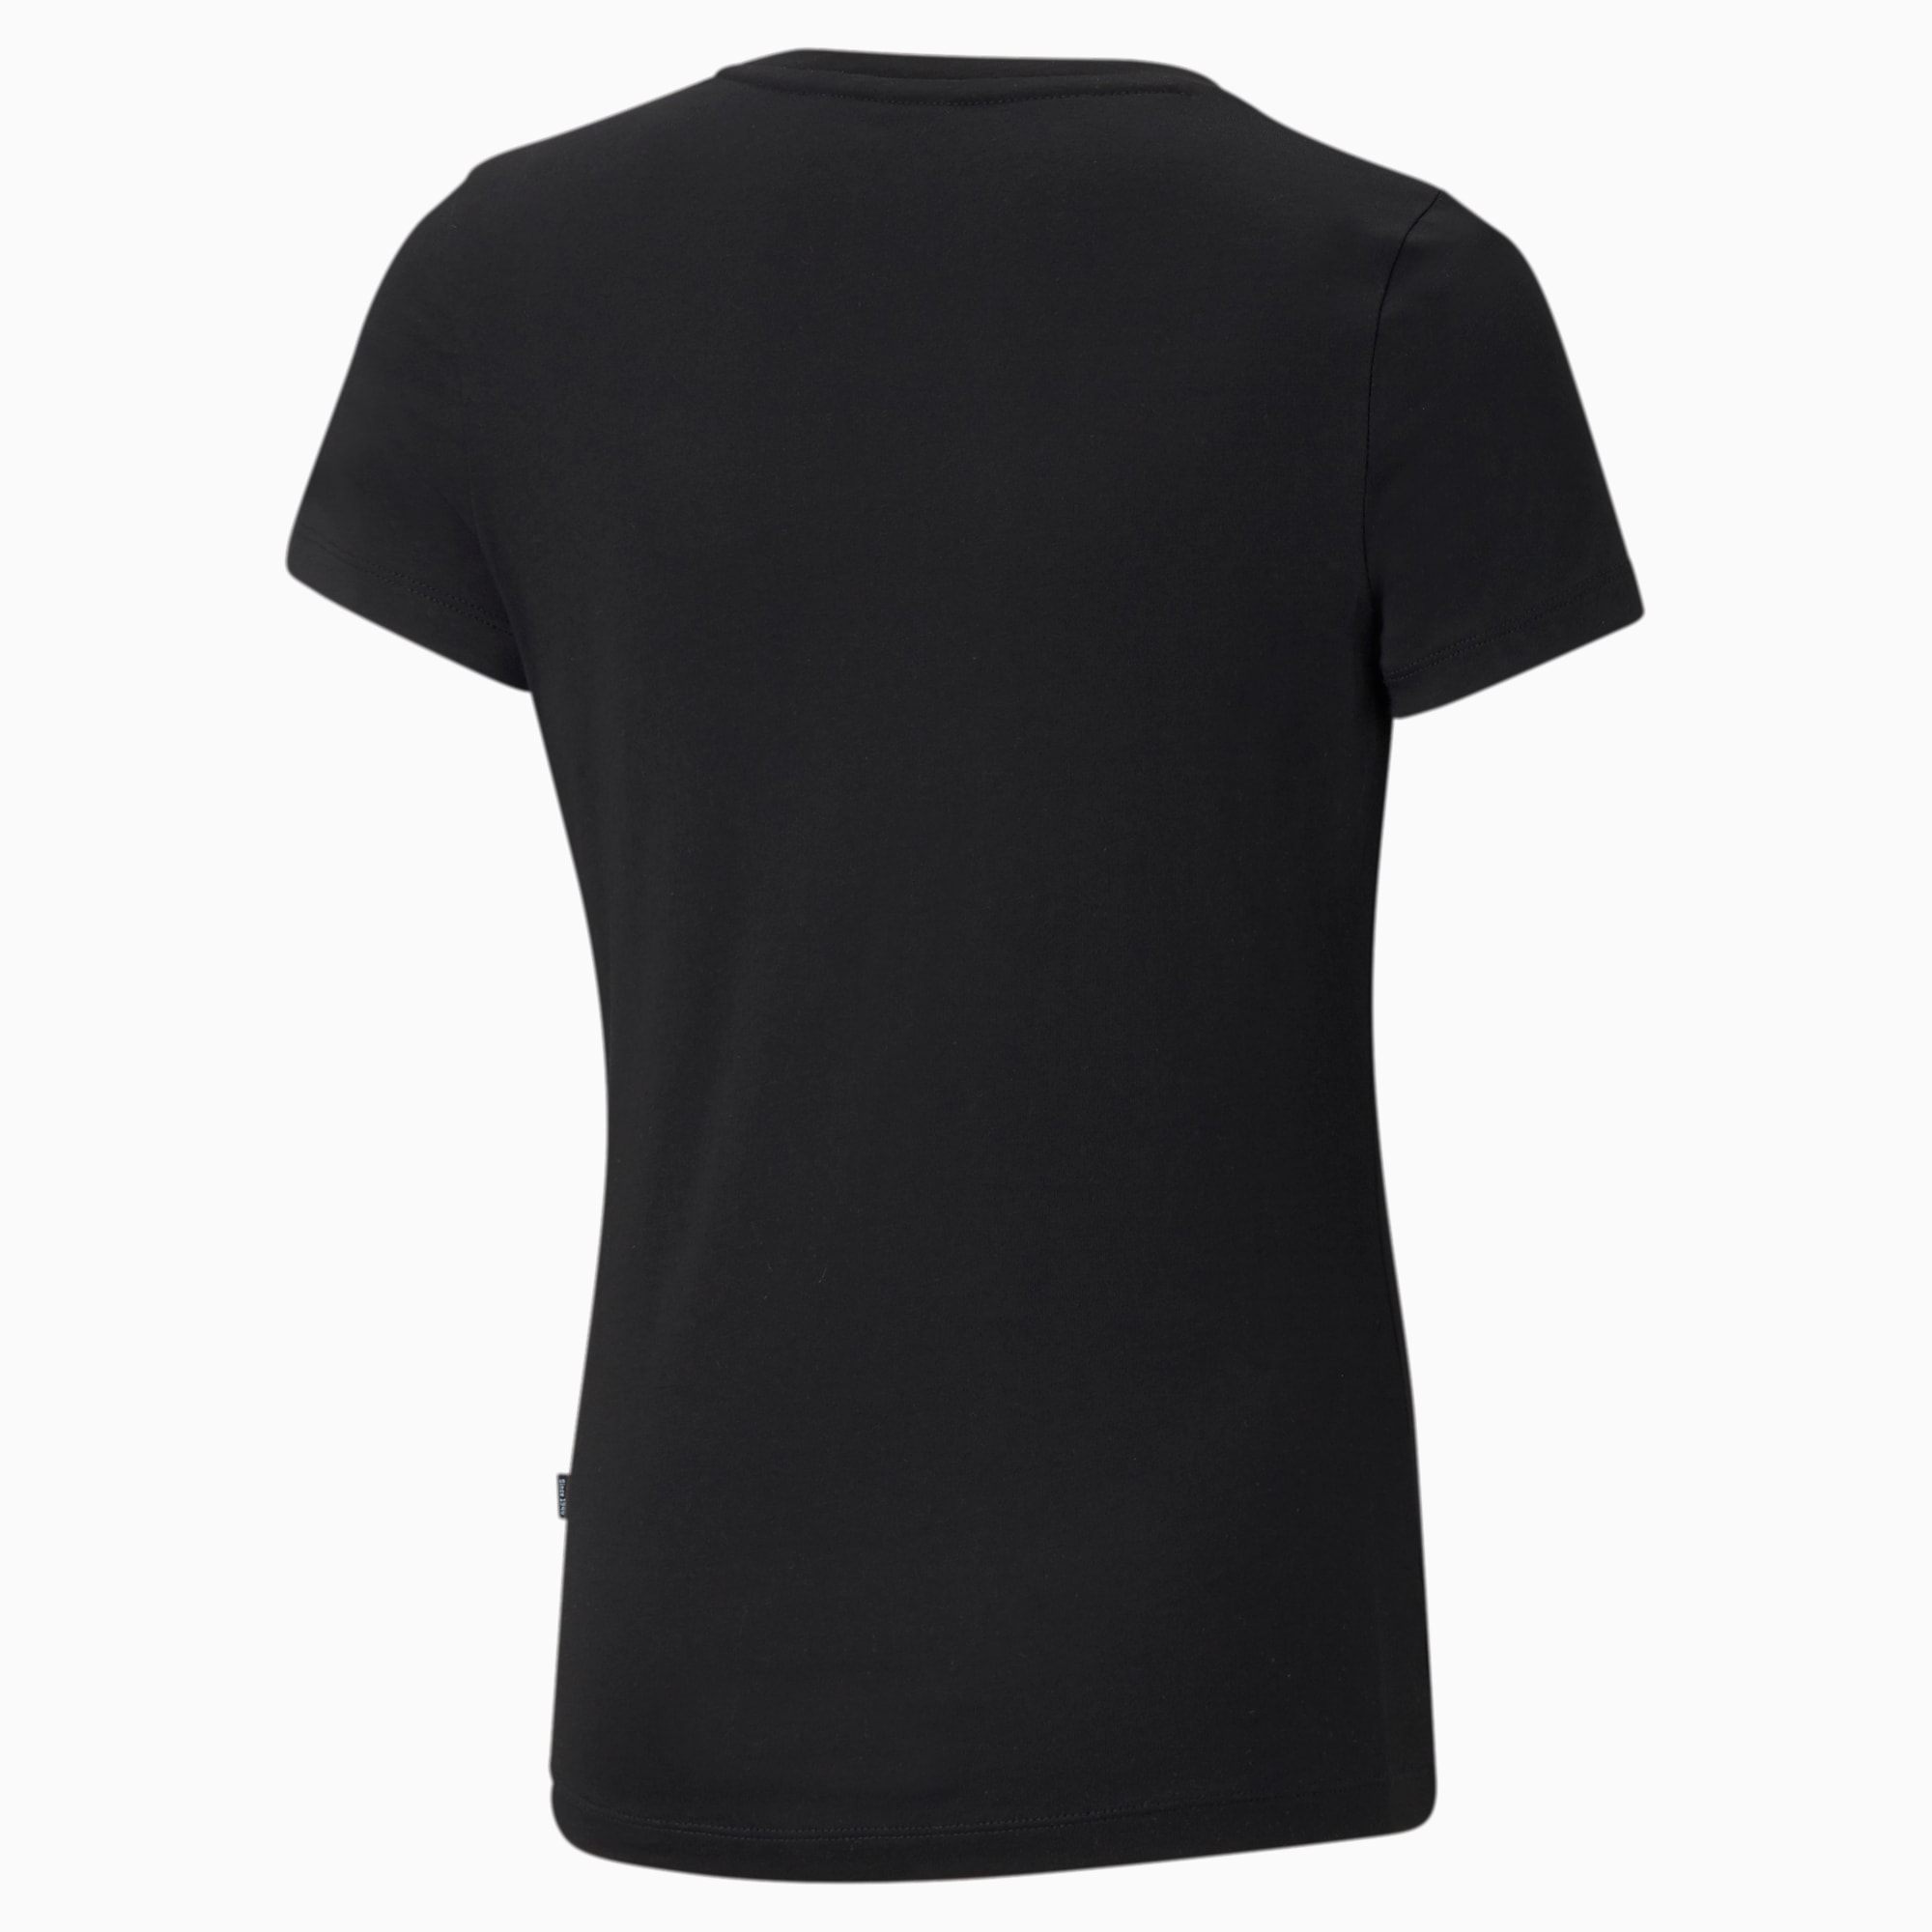 PUMA Essentials Logo Youth T-Shirt, Black, Size 92, Clothing